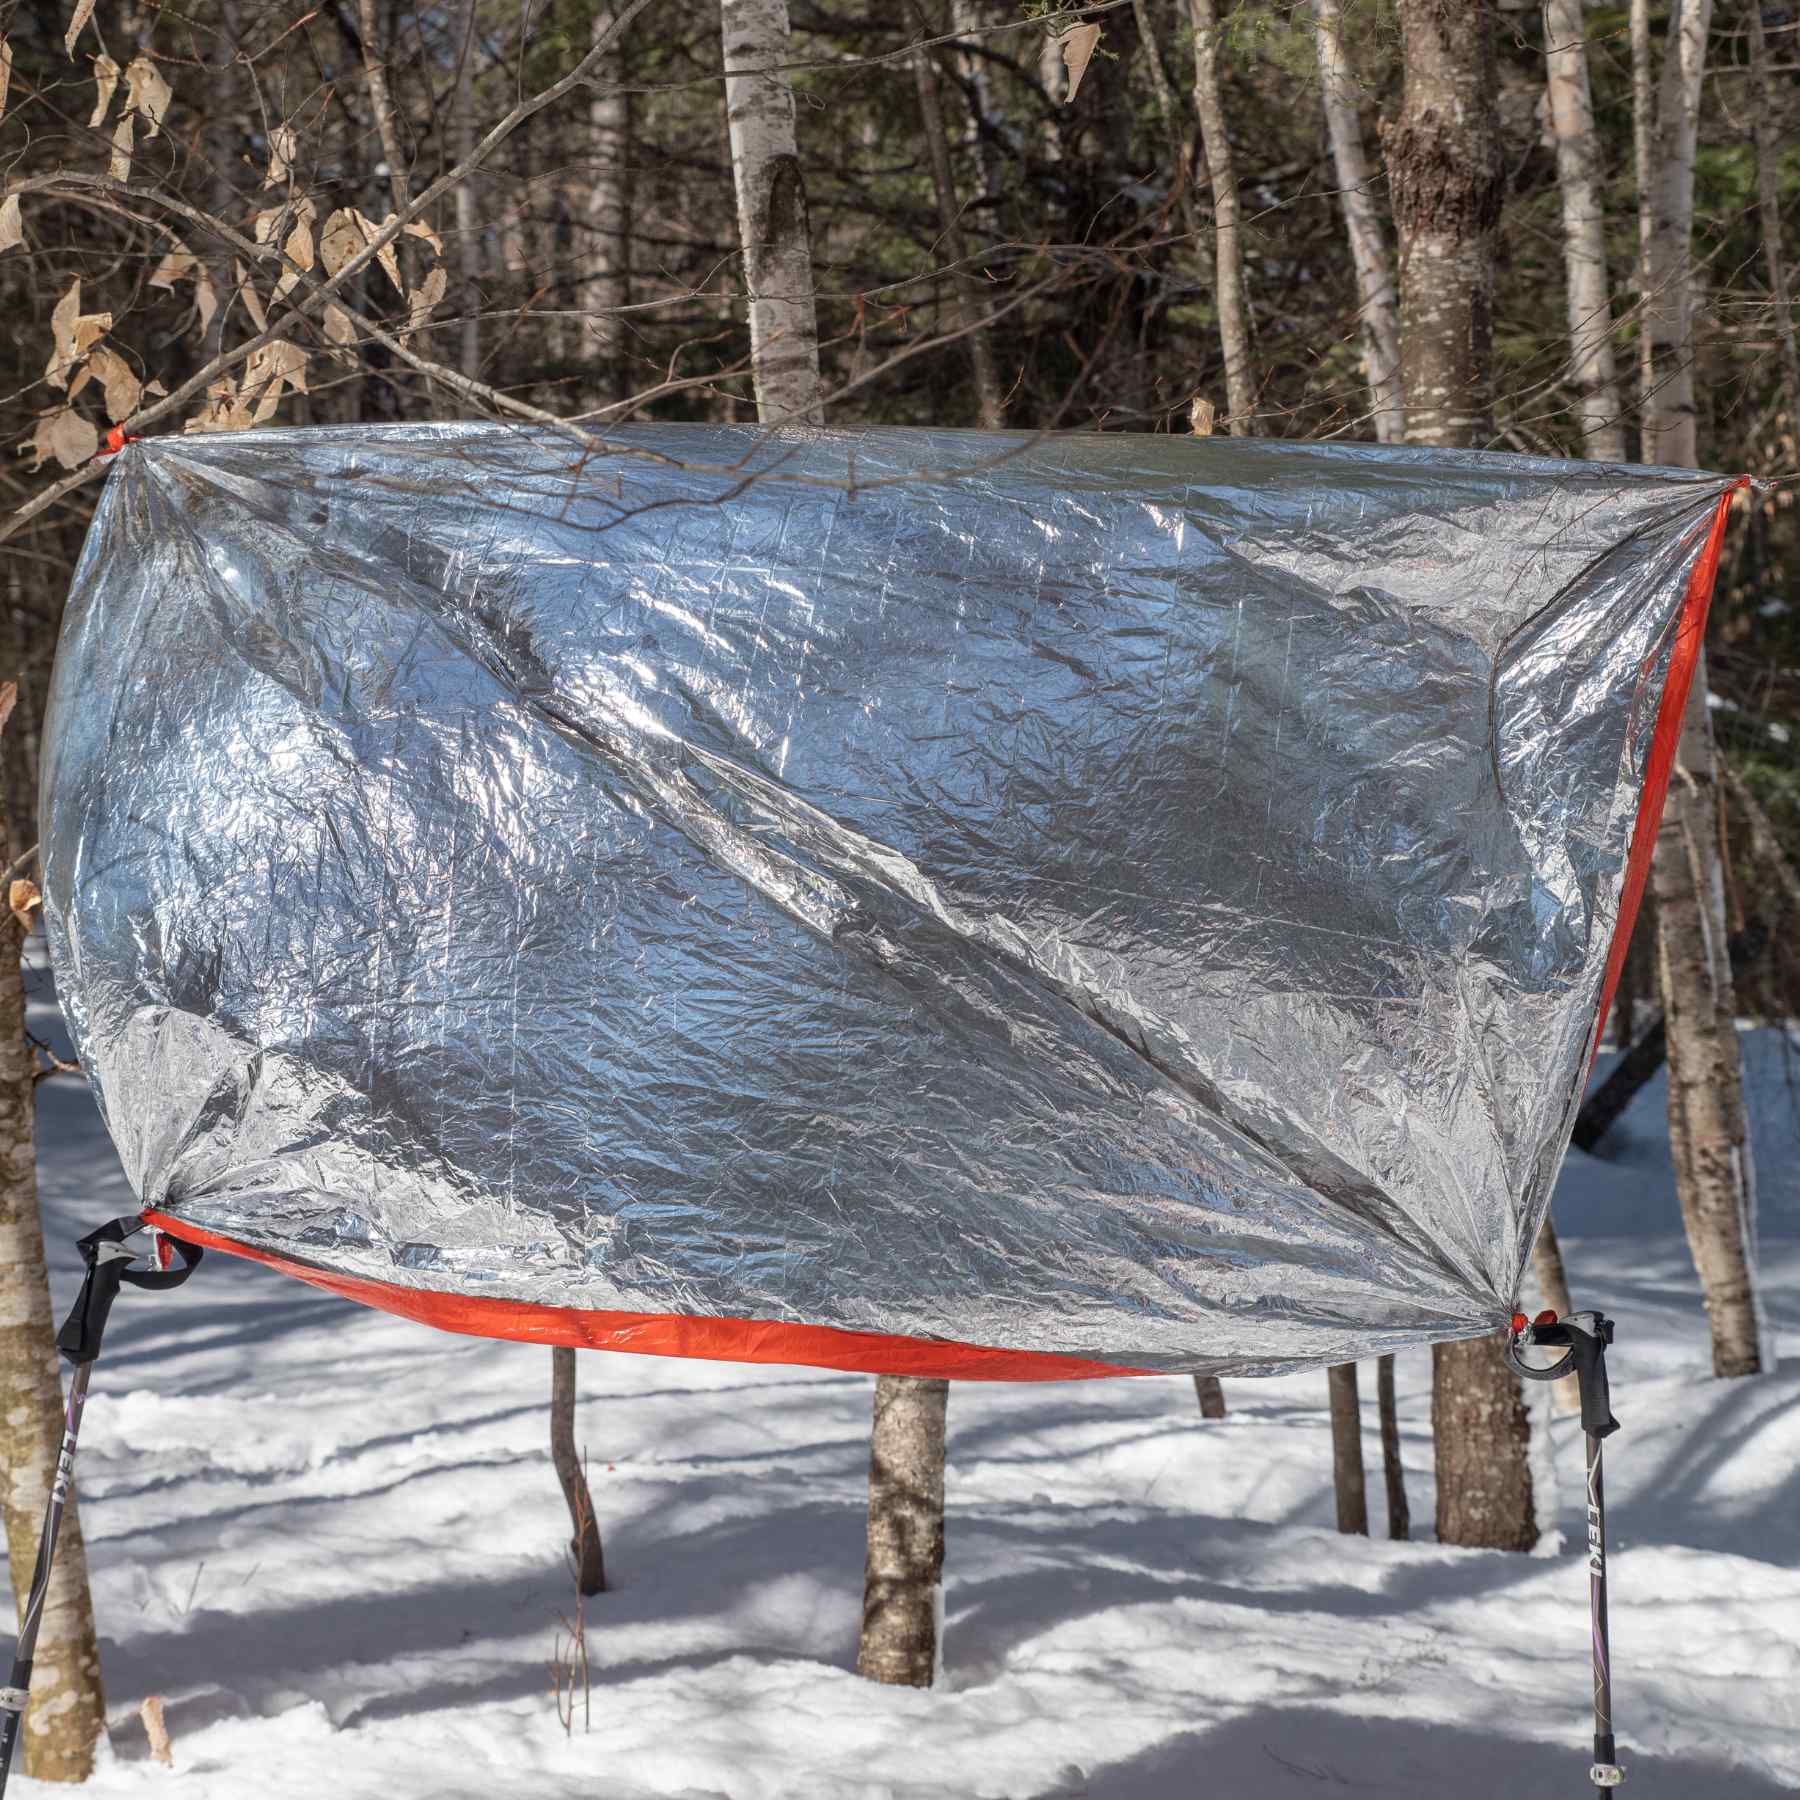 Portable Emergency Tent Outdoor Camping Emergency Blanket Sleep